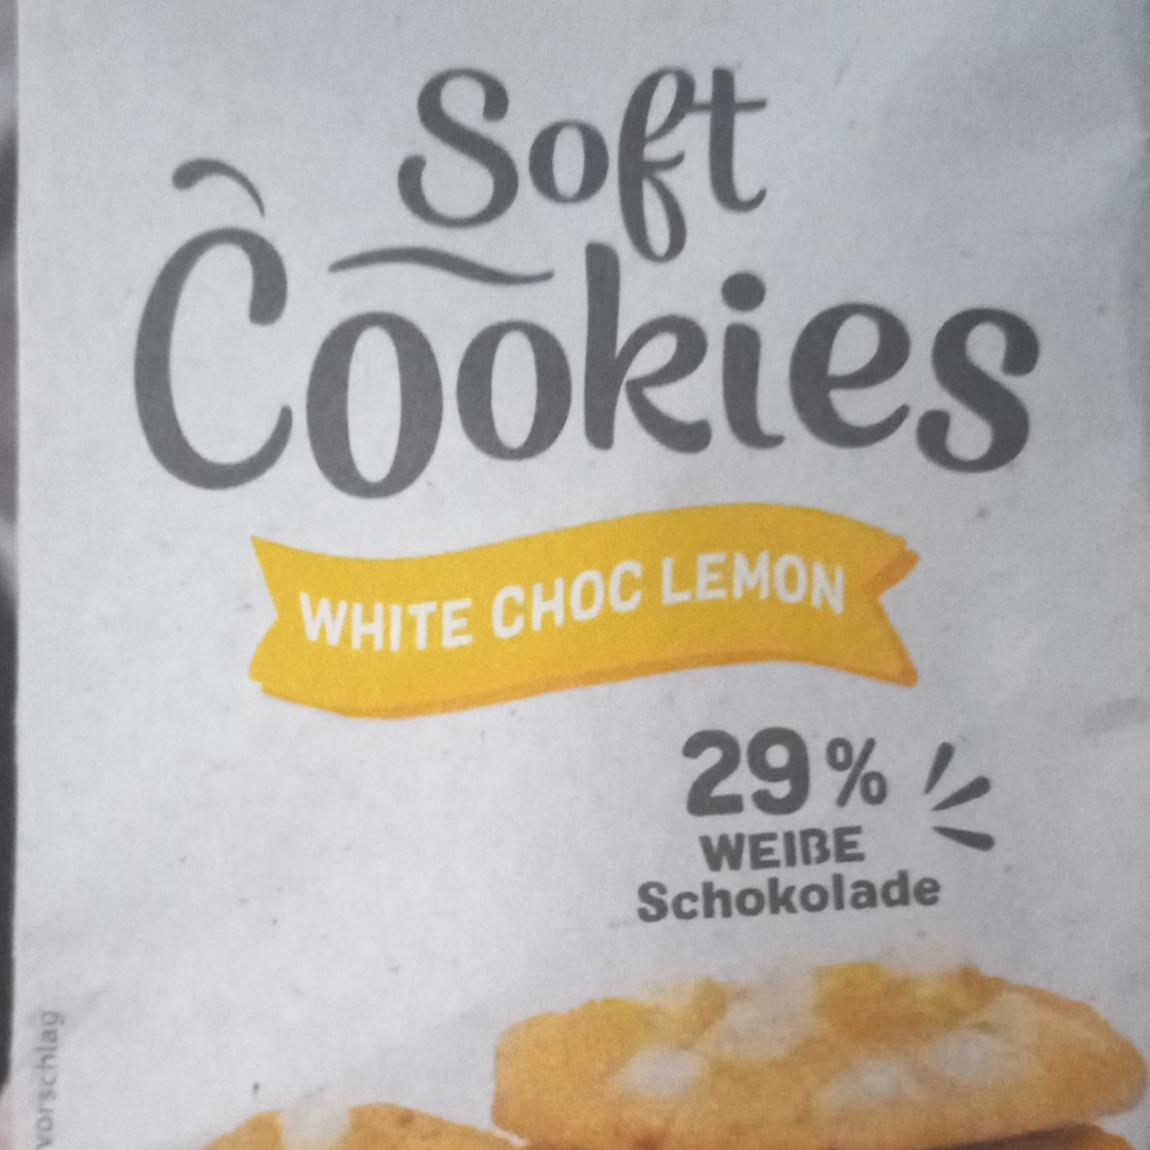 Фото - Печенье с лимоном и белым шоколадом Soft Cookies White Choc Lemon Rewe Beste Wahl